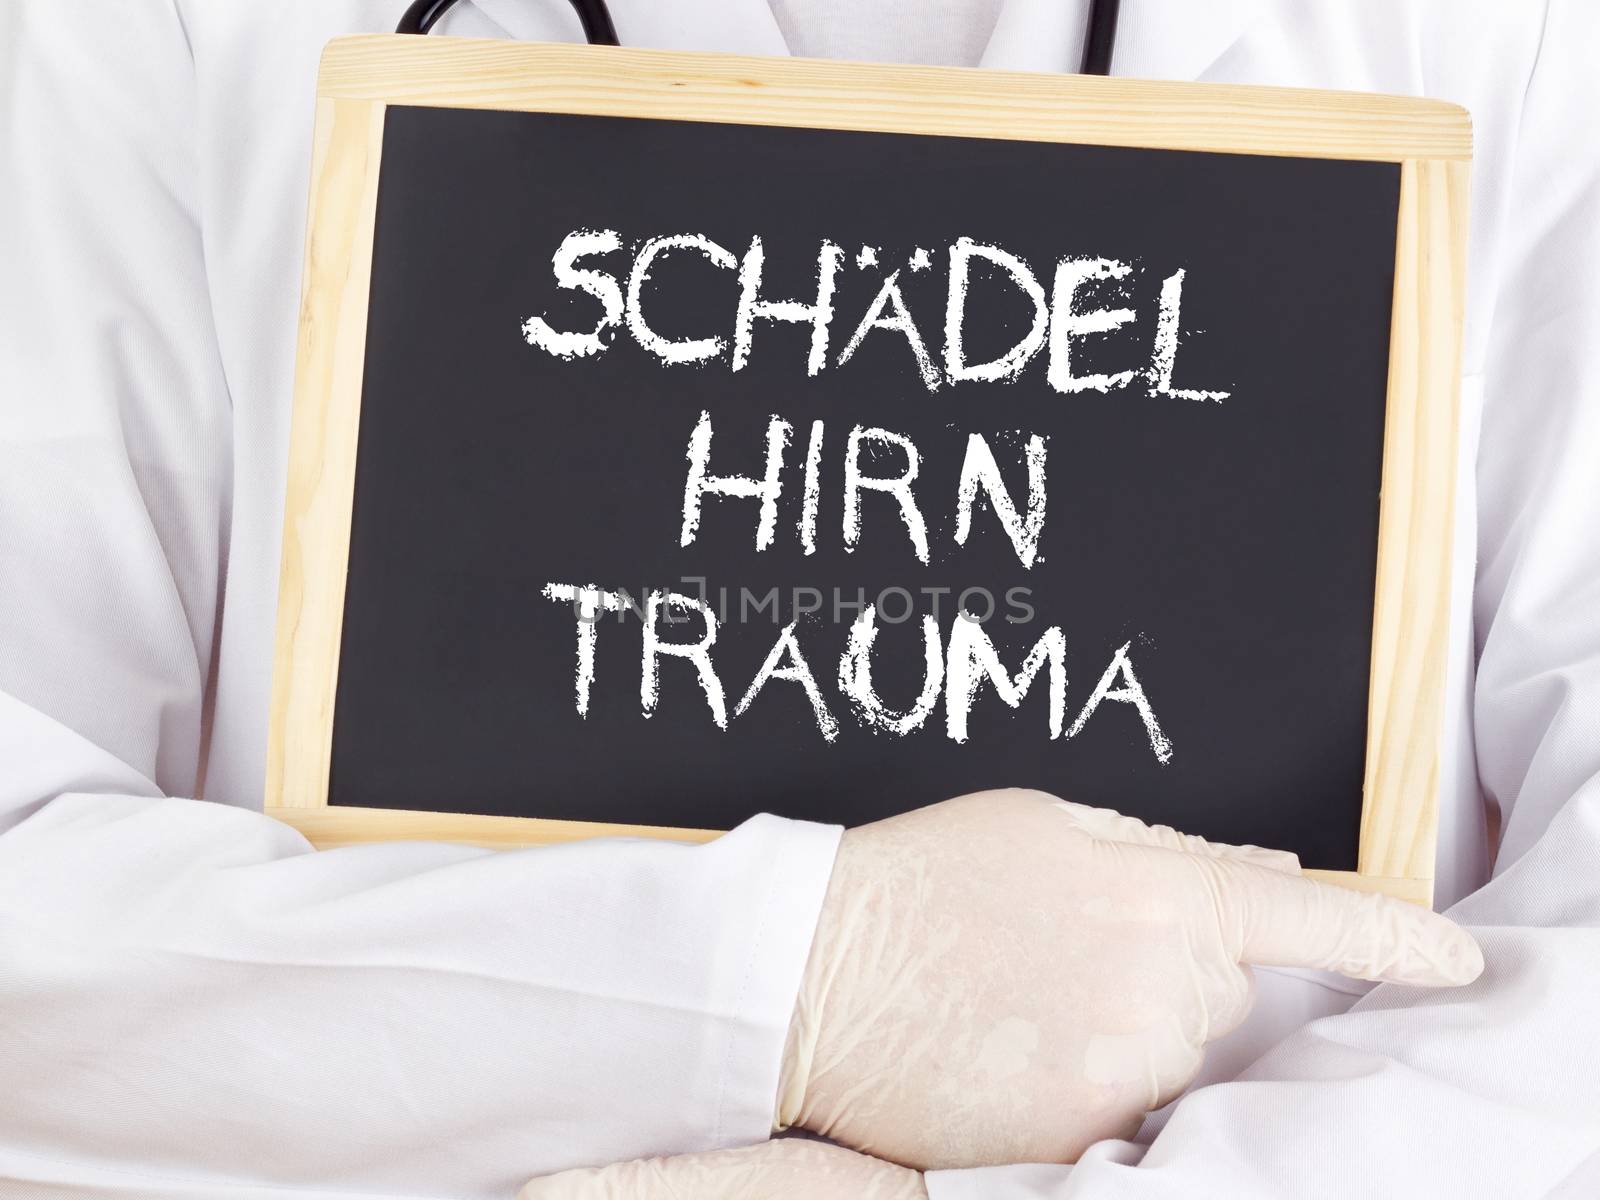 Doctor shows information: traumatic brain injury in german